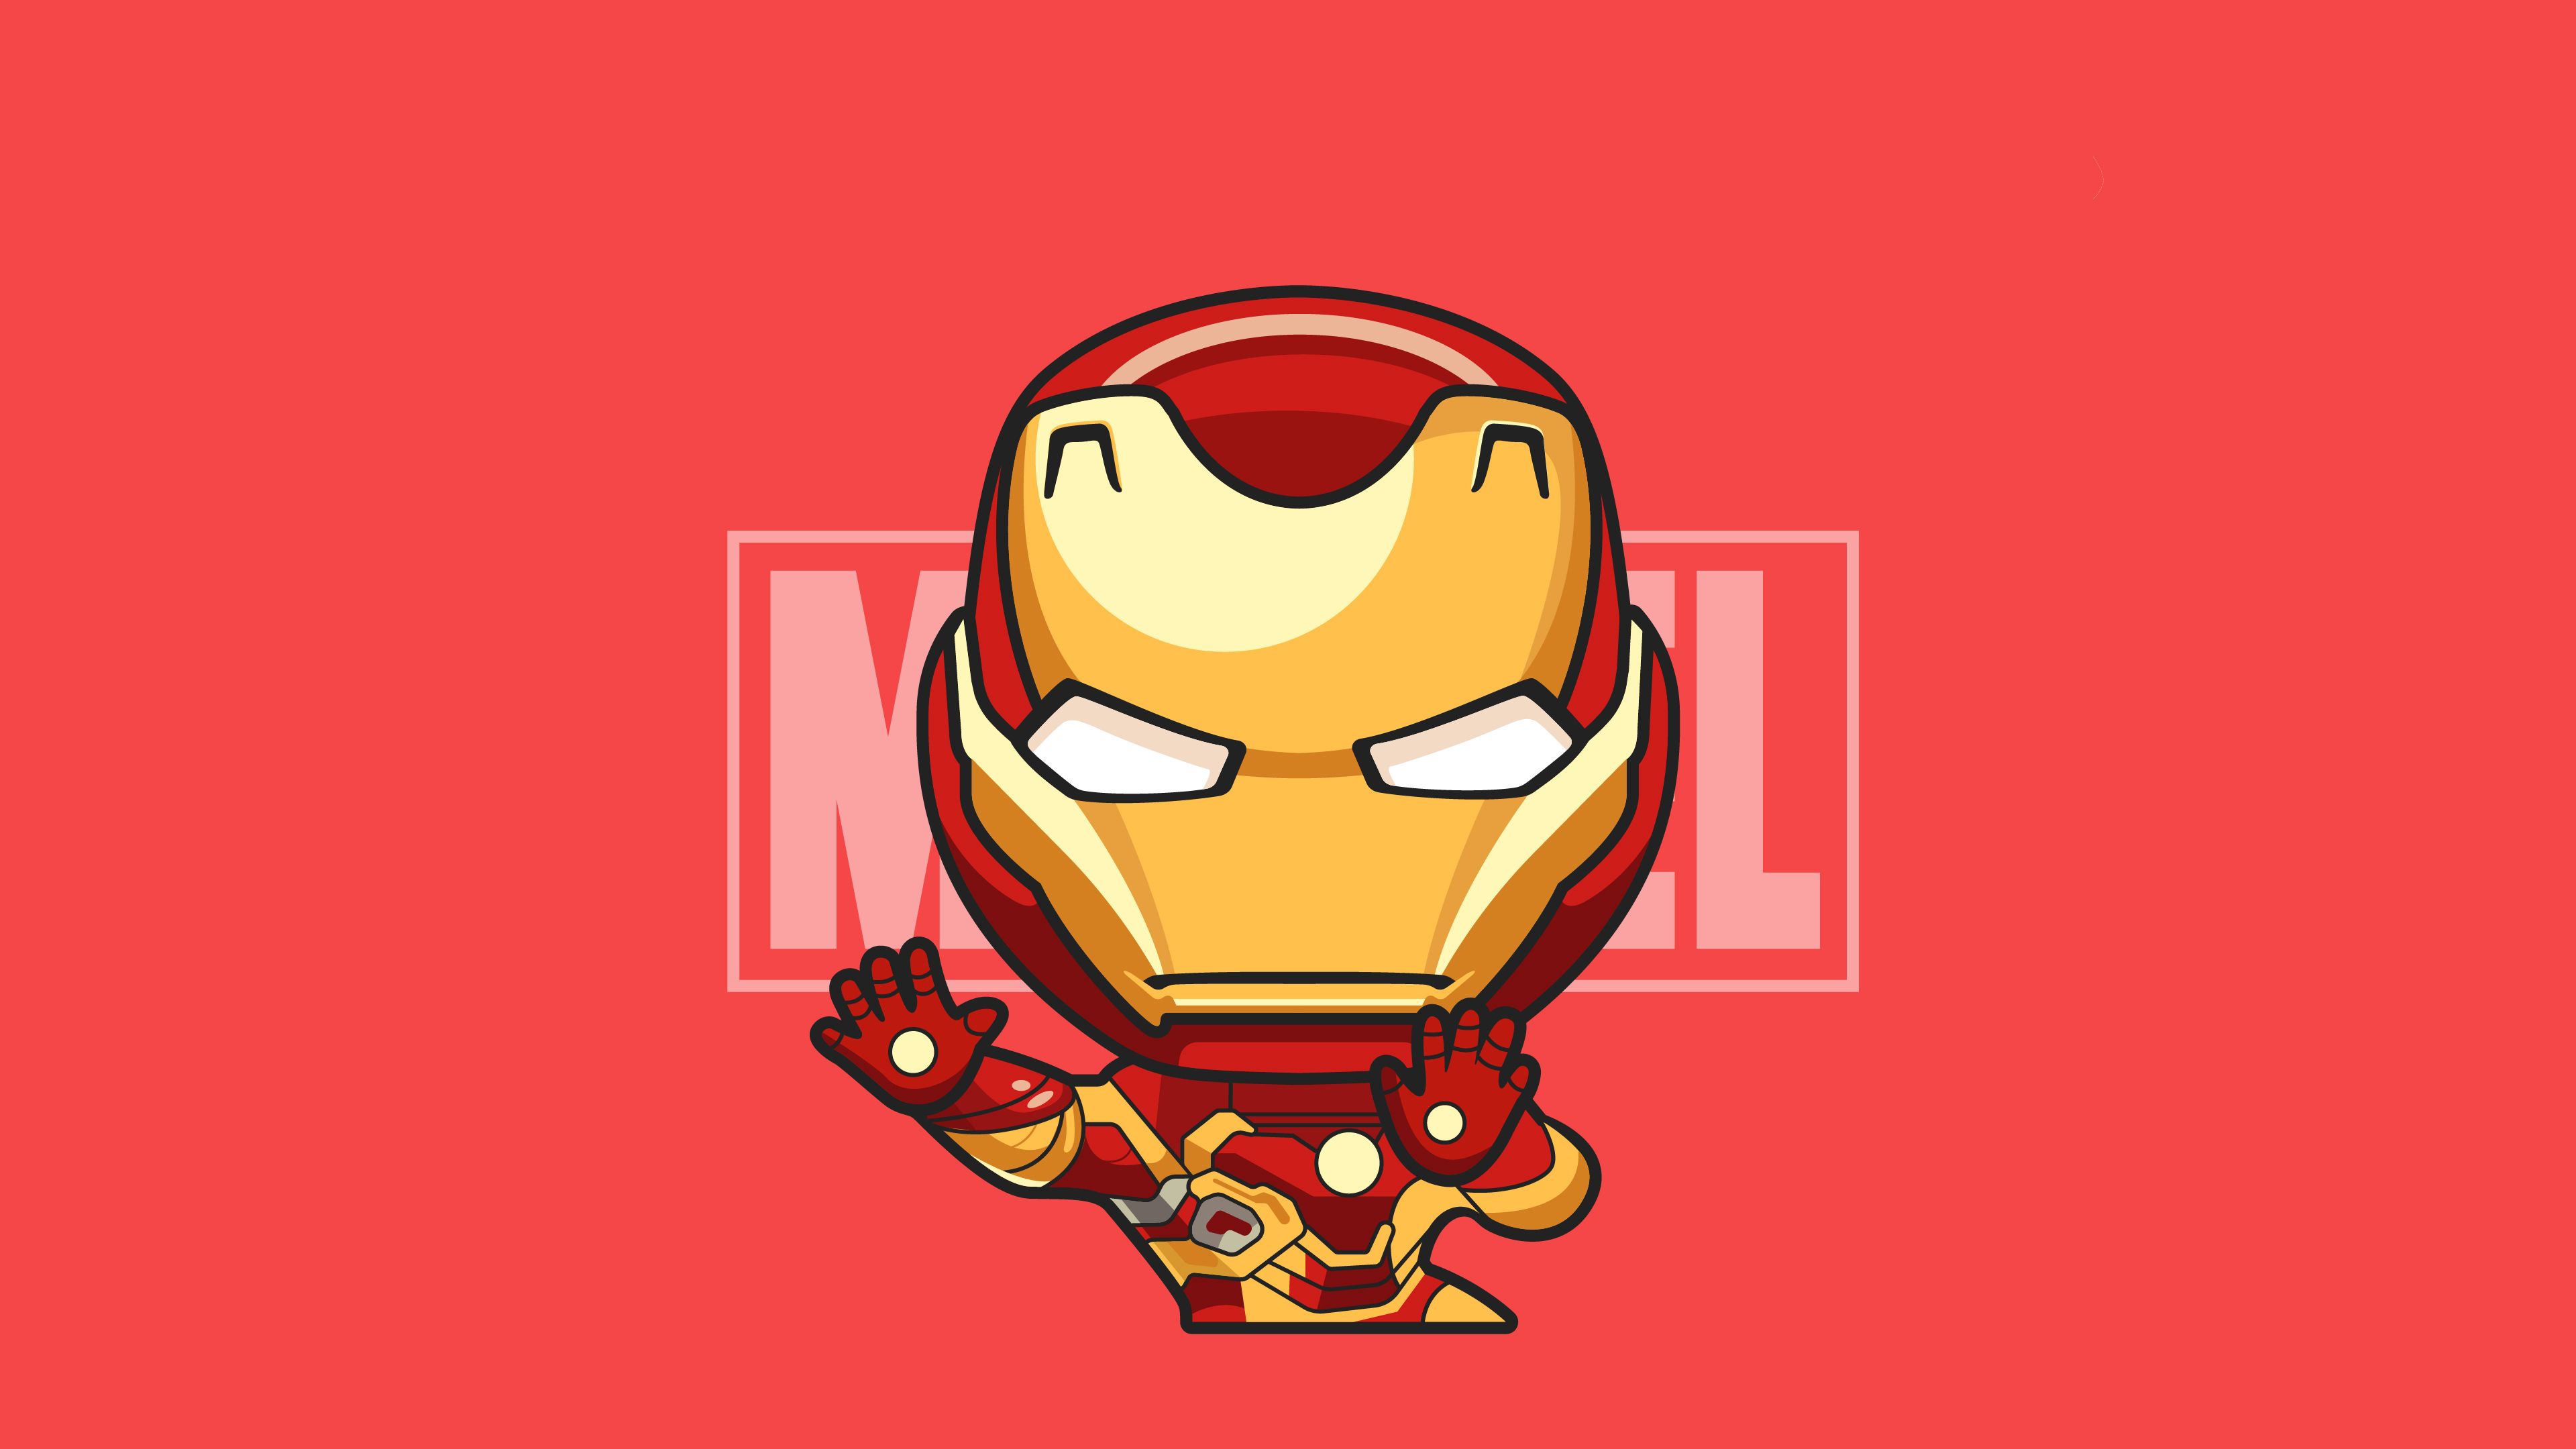 Iron Man Illustration Art 4k Superheroes Wallpaper, Iron Man Wallpaper, Illustration Wallpaper, Hd Wallpaper,. Man Illustration, Iron Man, Iron Man Wallpaper